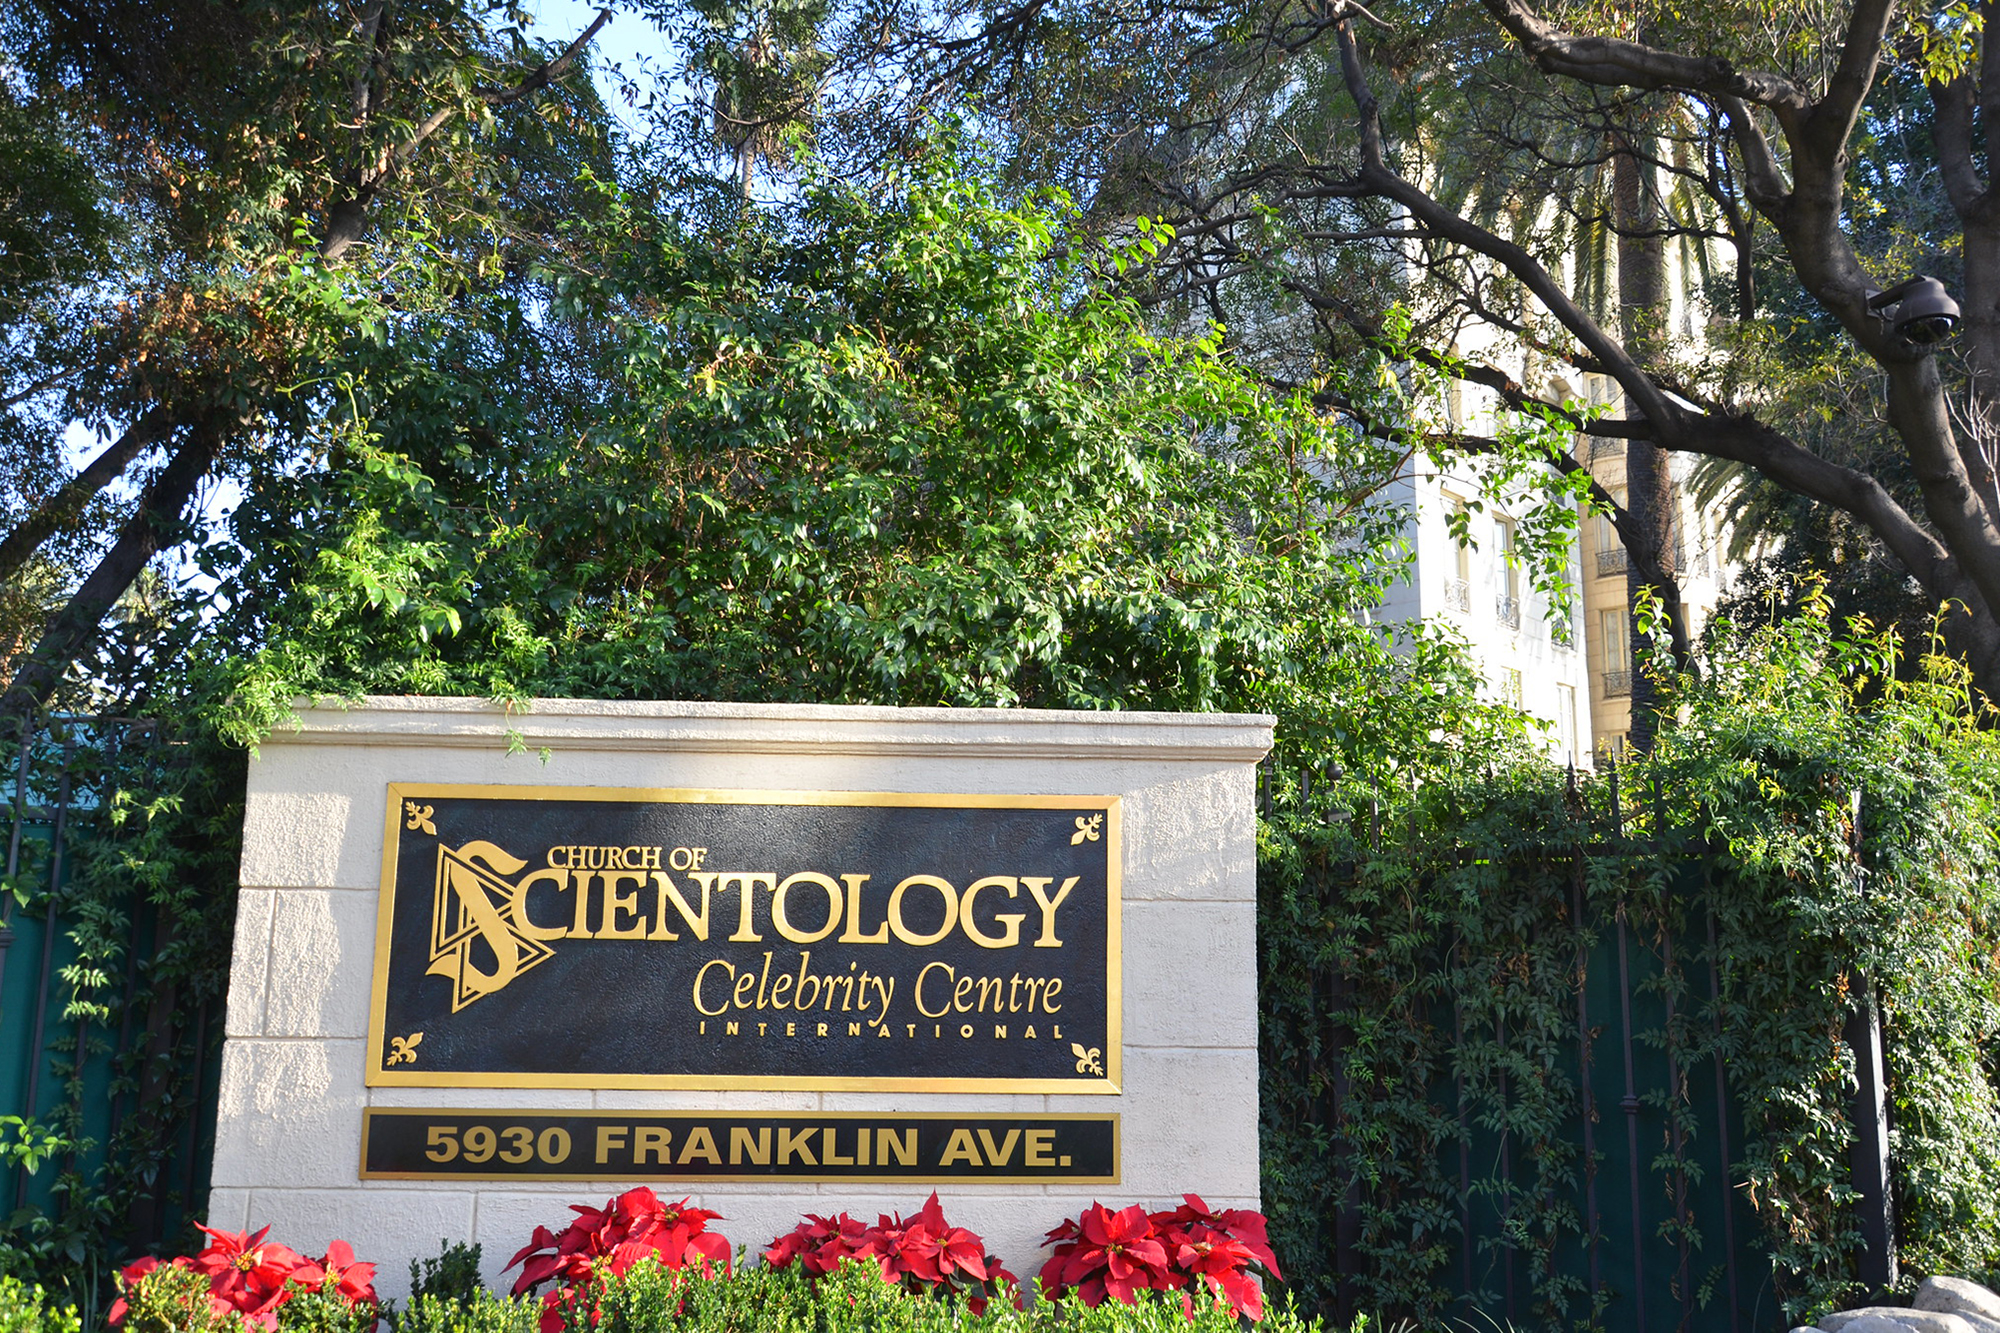 Church of Scientology, Celebrity Centre 